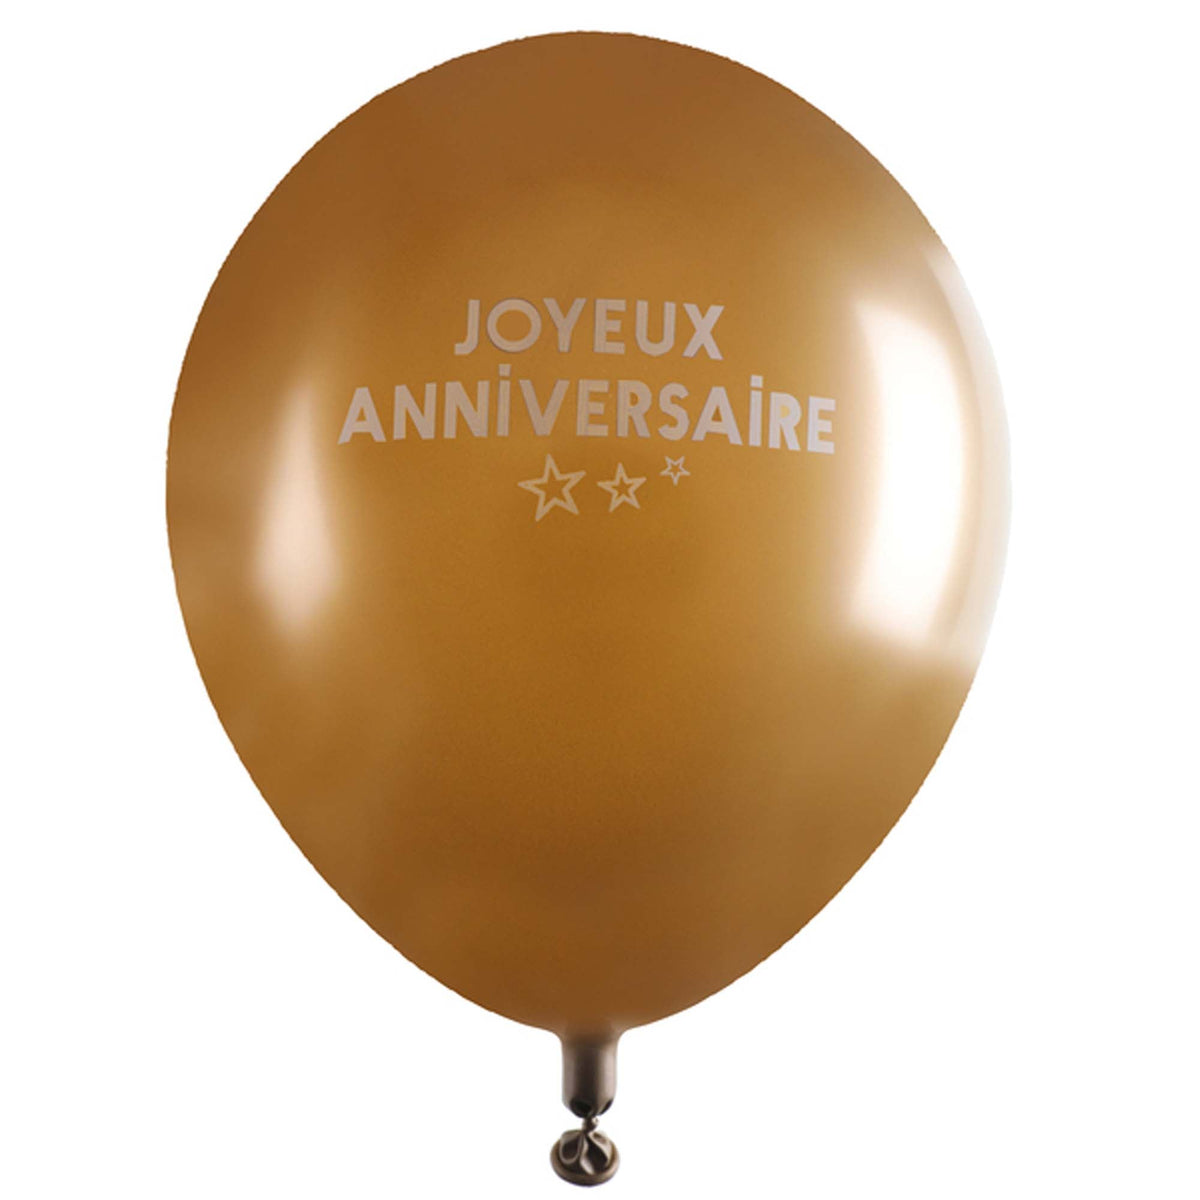 SANTEX General Birthday "Joyeux Anniversaire" Birthday Gold Latex Balloons, 12 Inches, 6 Count